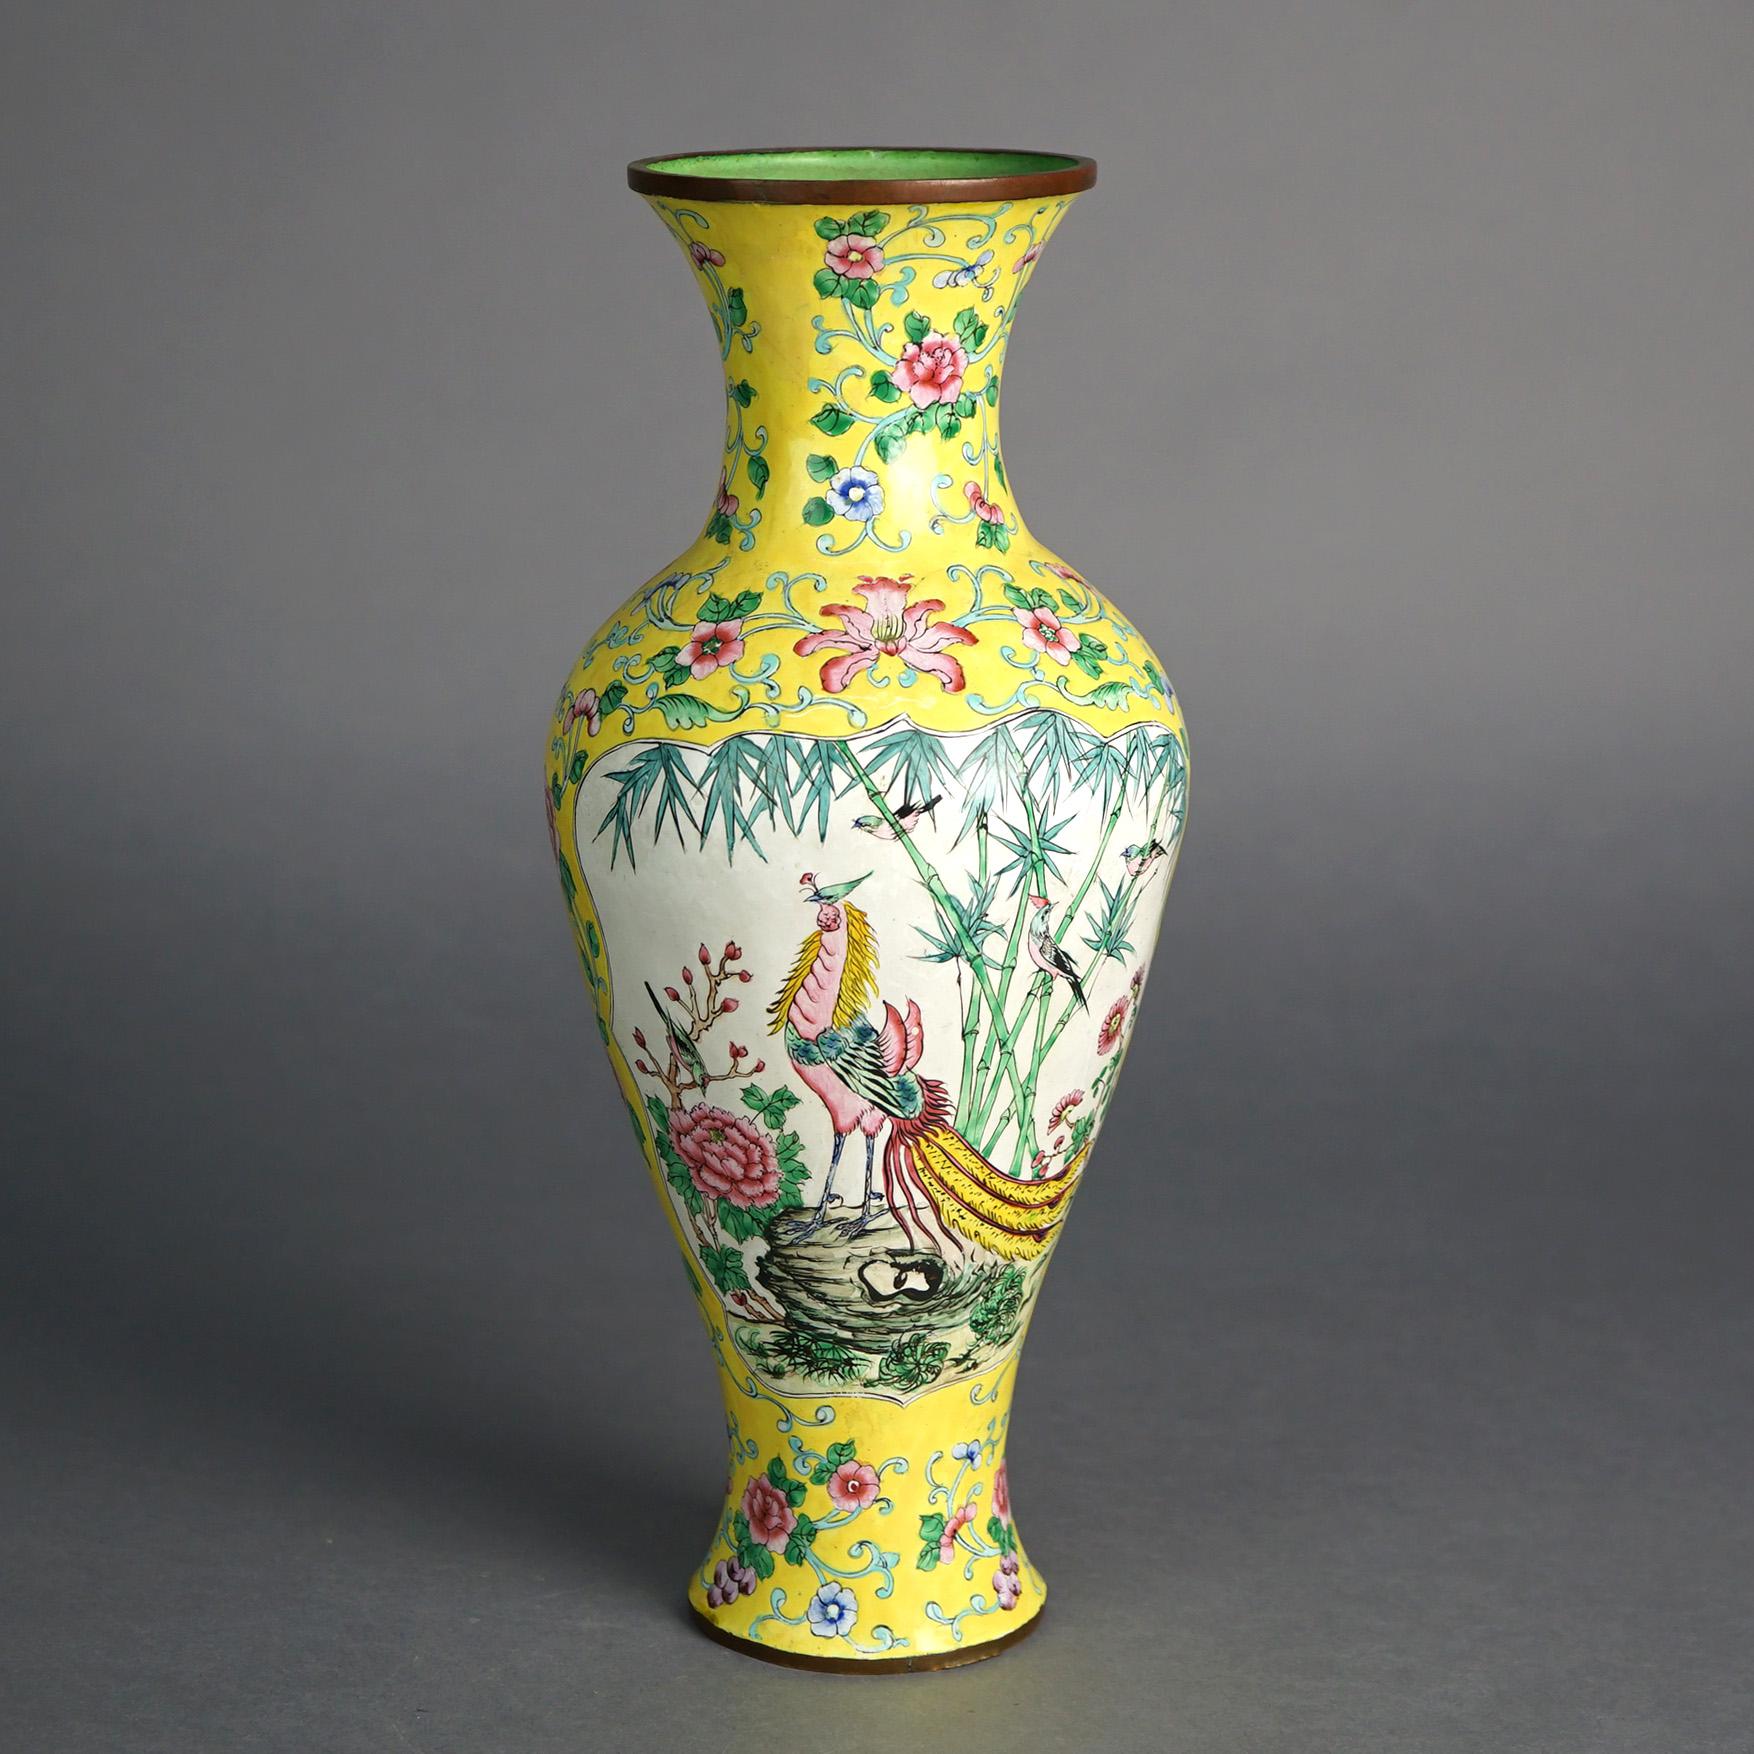 Antique Chinese Enameled Vase with Landscape & Flowers C1930

Measures- 13''H x 5.5''W x 5.5''D